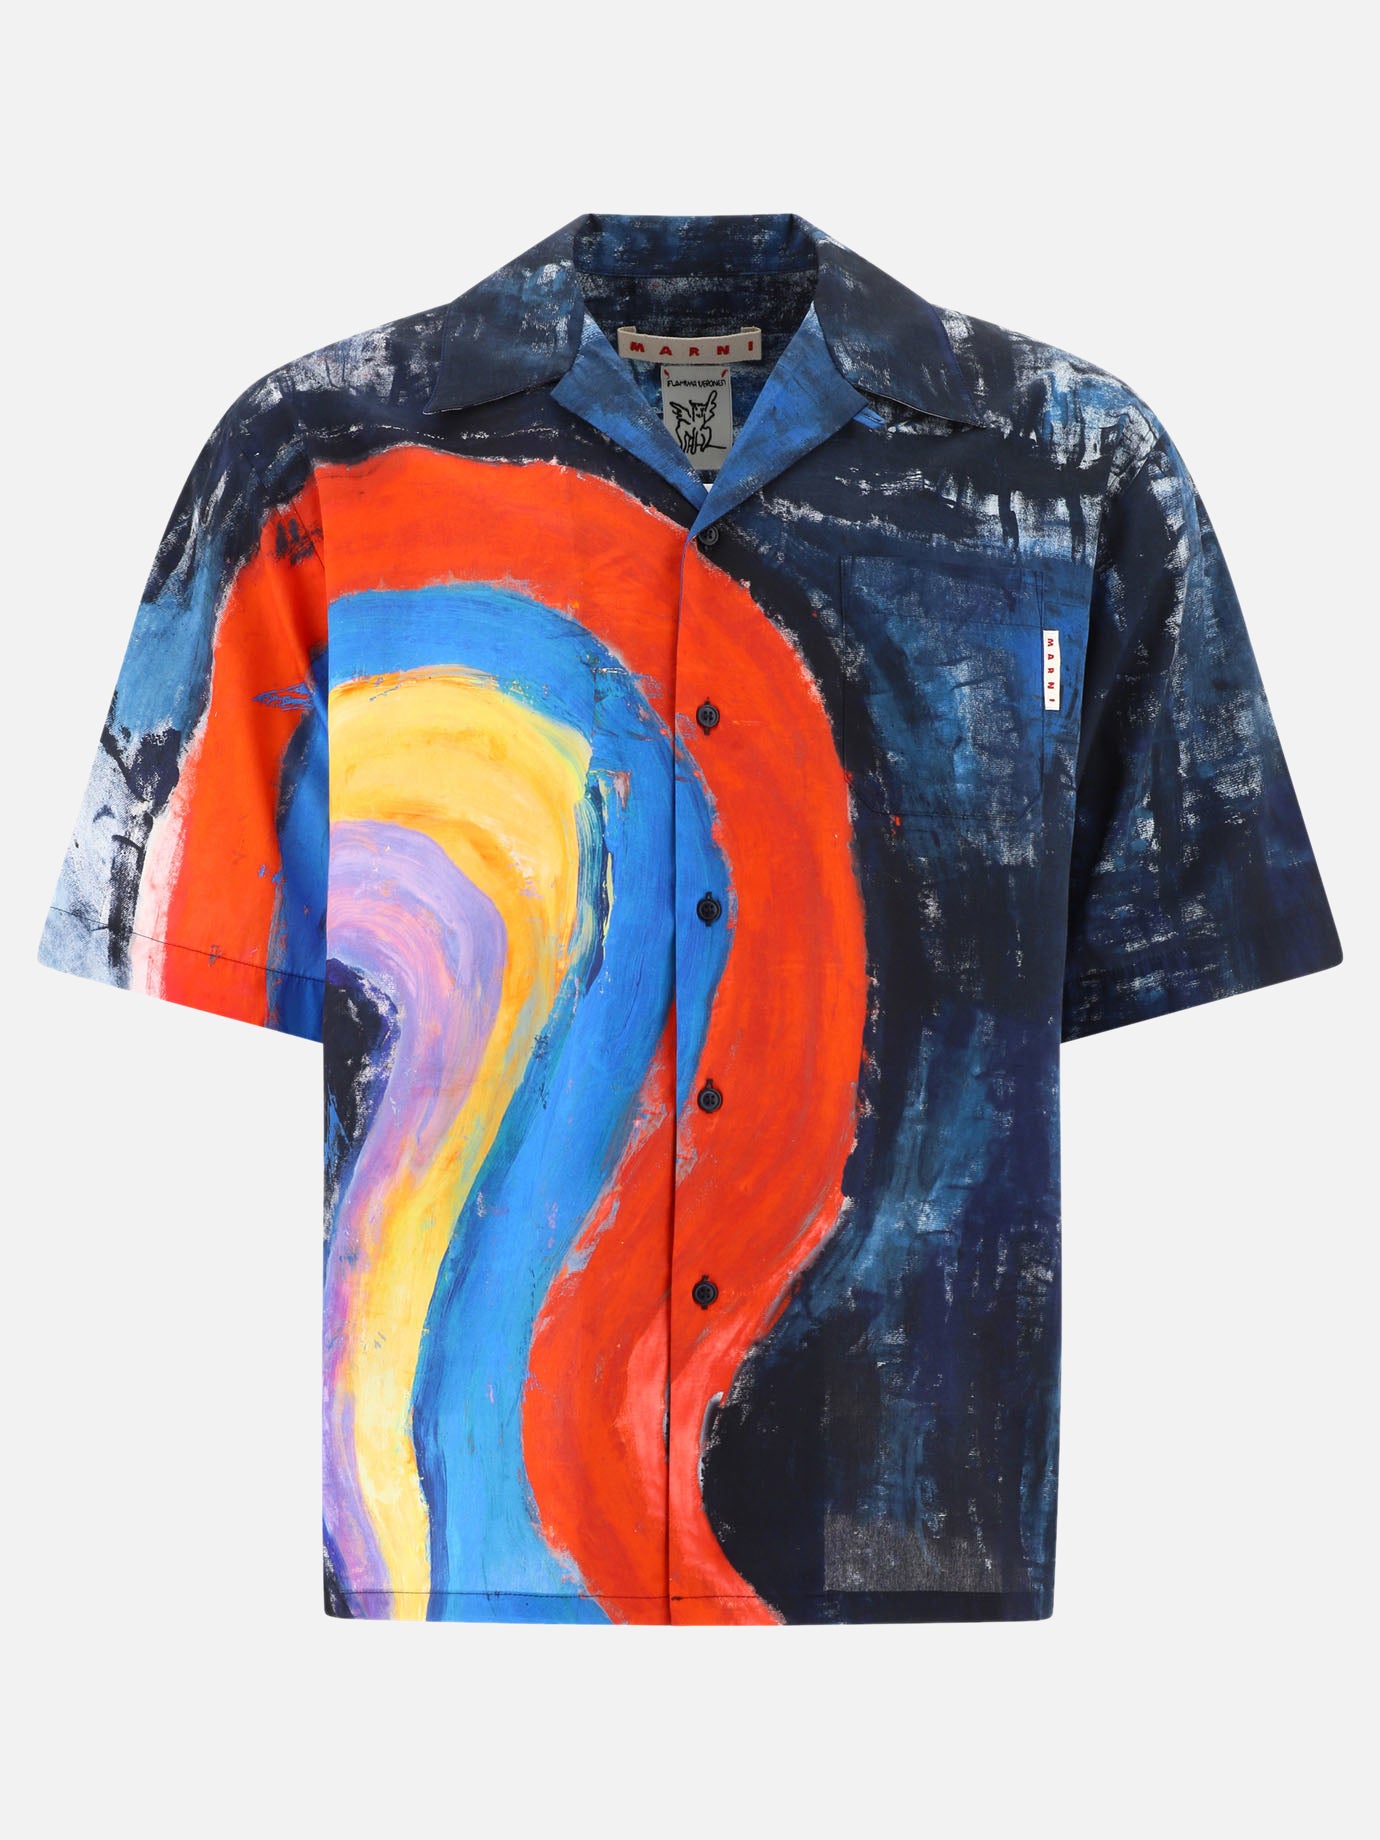 "Rainbow" bowling shirt